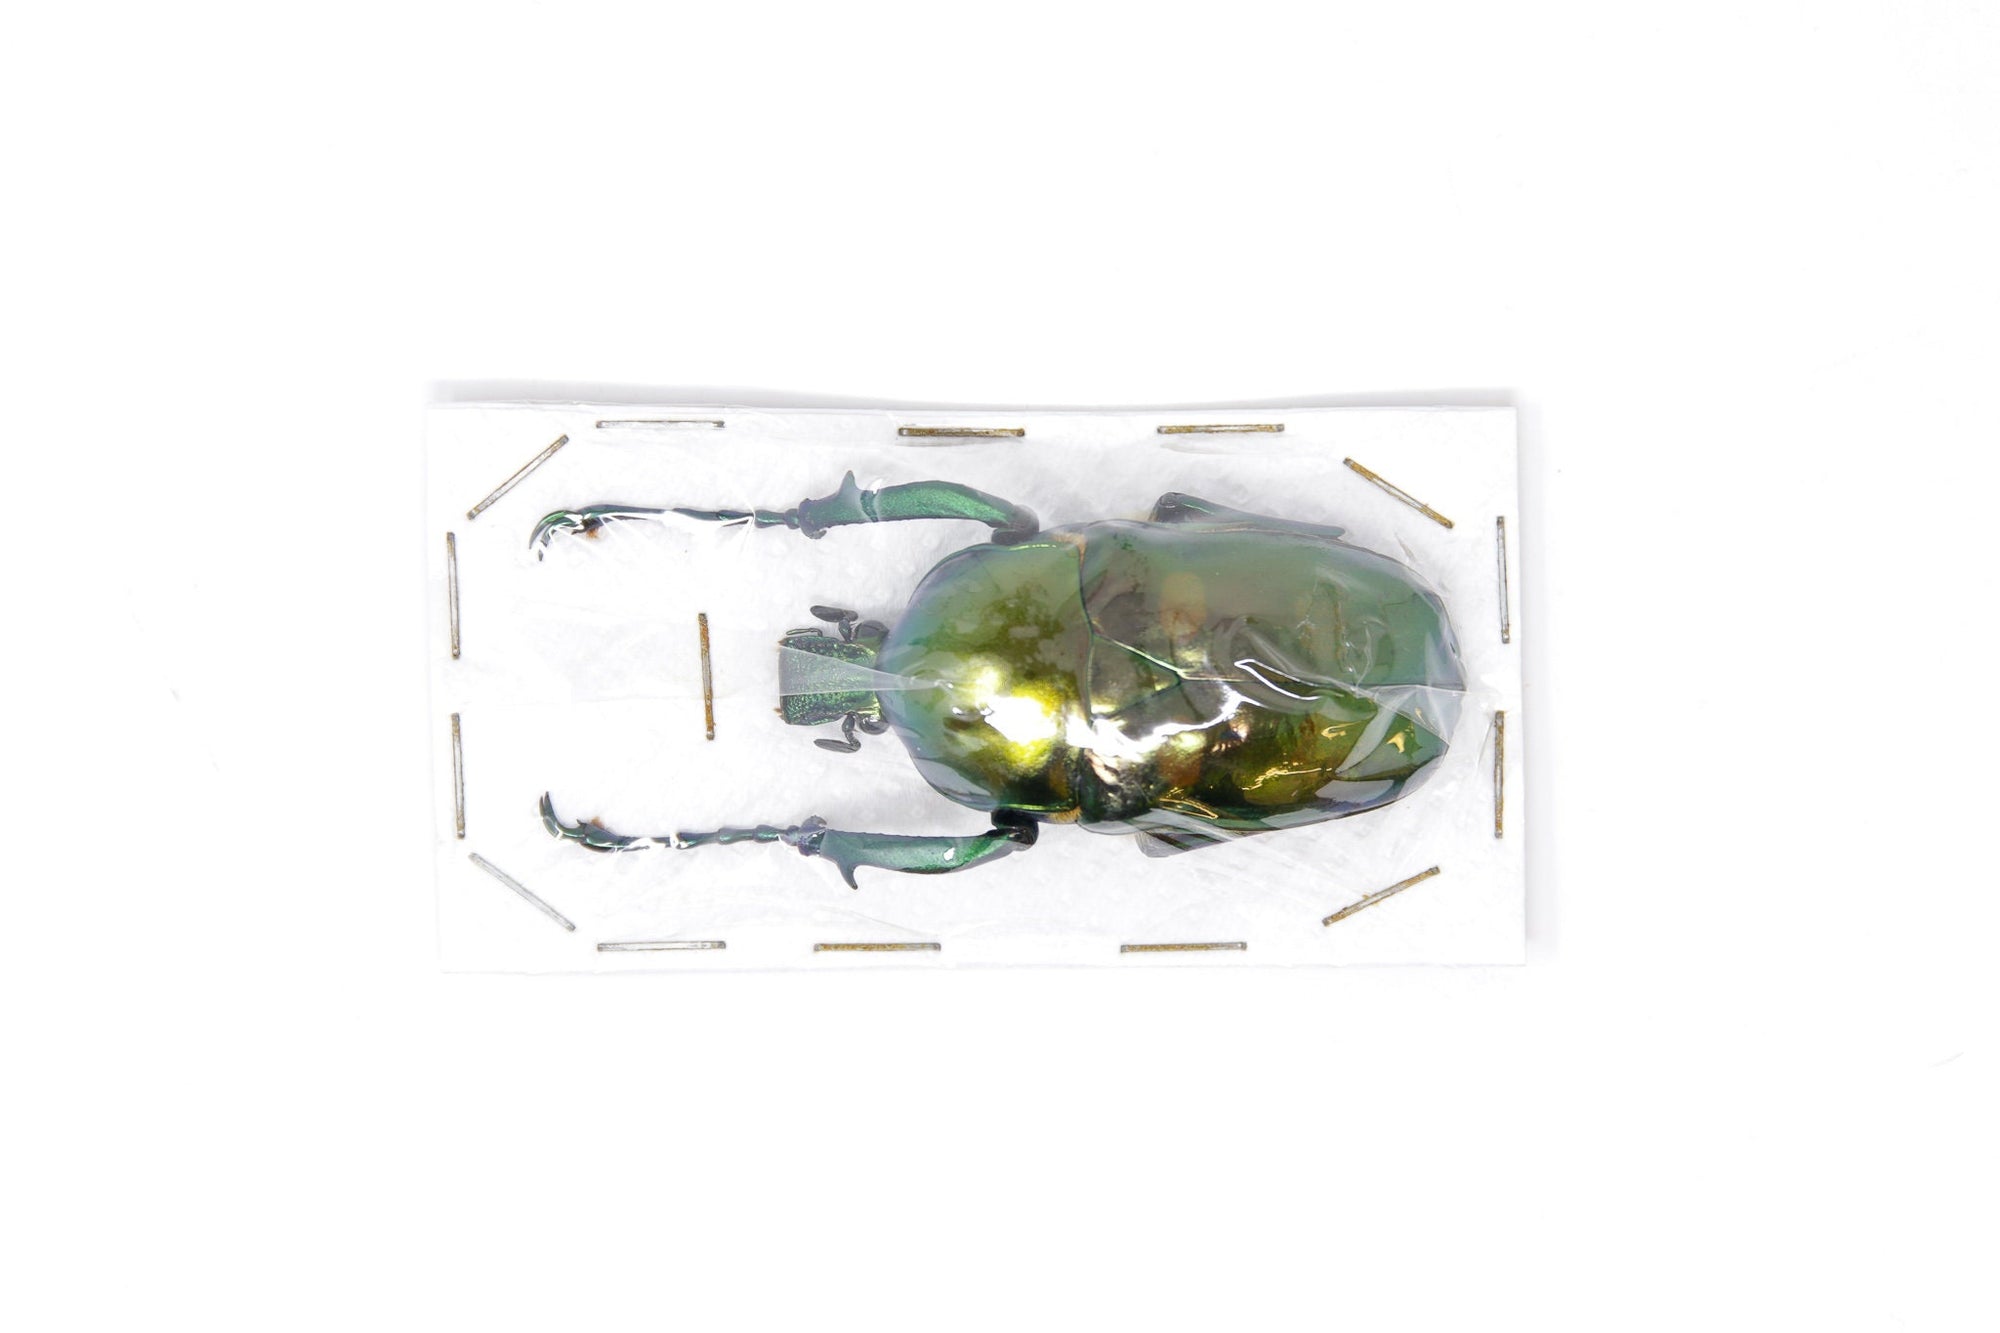 Jumnos ruckeri ruckeri 49.9mm A1 | Thailand Green Flower Beetle, Entomology Specimen